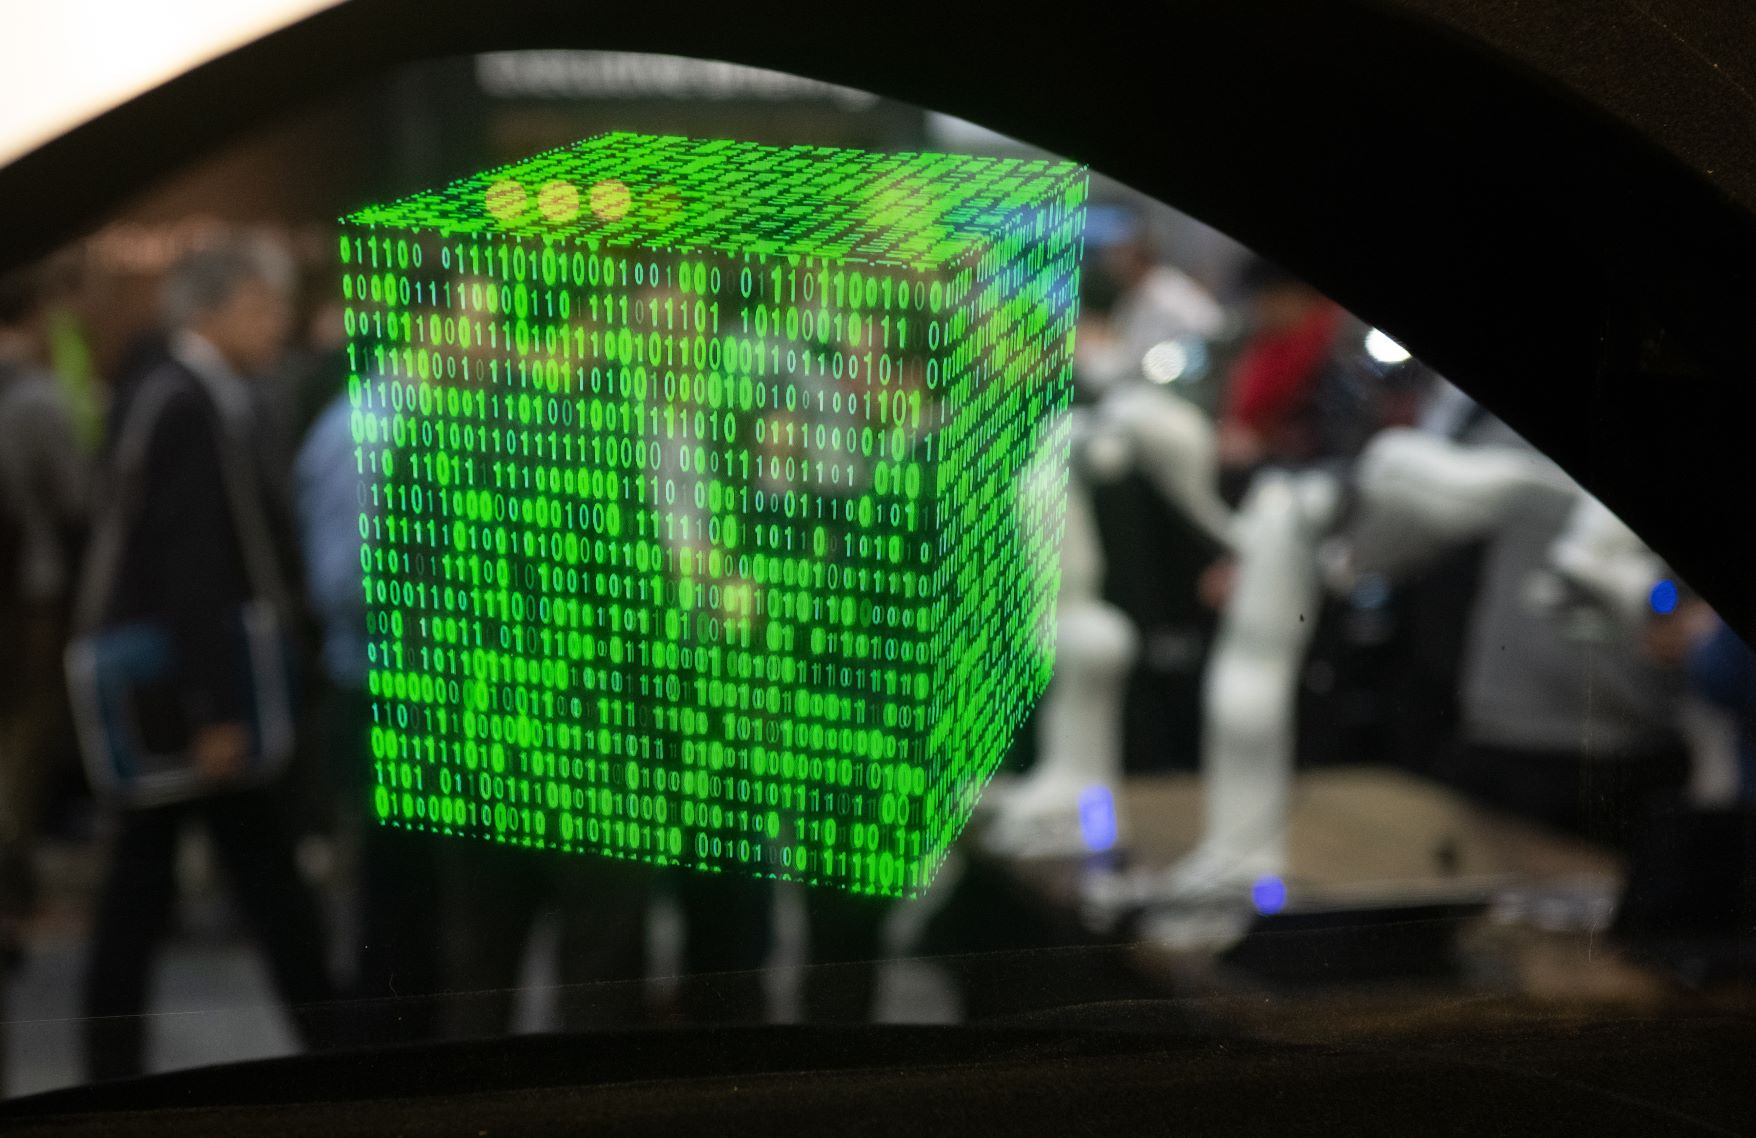 Microsoft HoloLens demo at Hannover Messe 2019